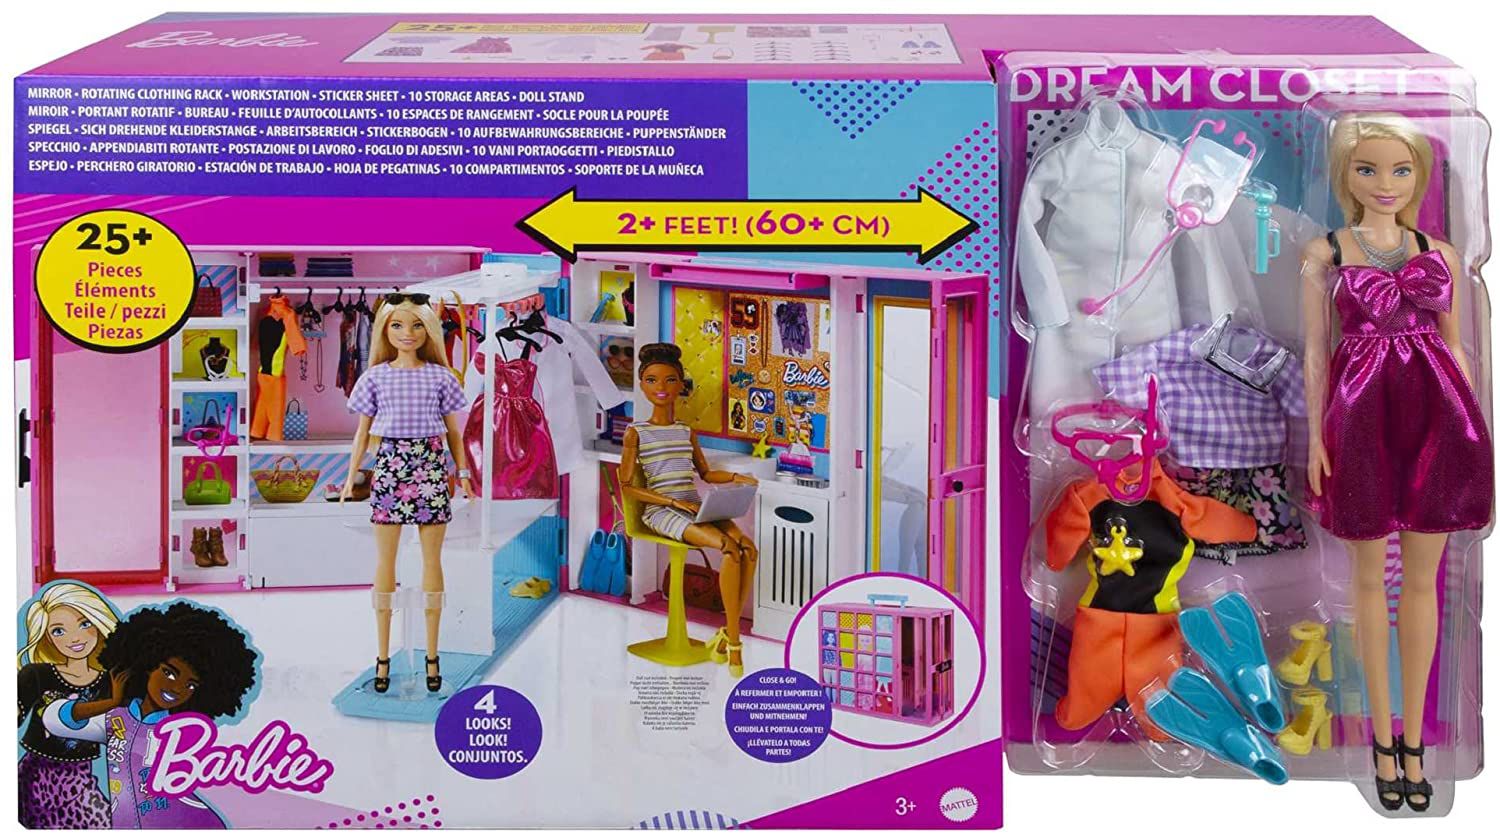 Boneca Troca de Roupa Girl Dressed - Zoop Toys